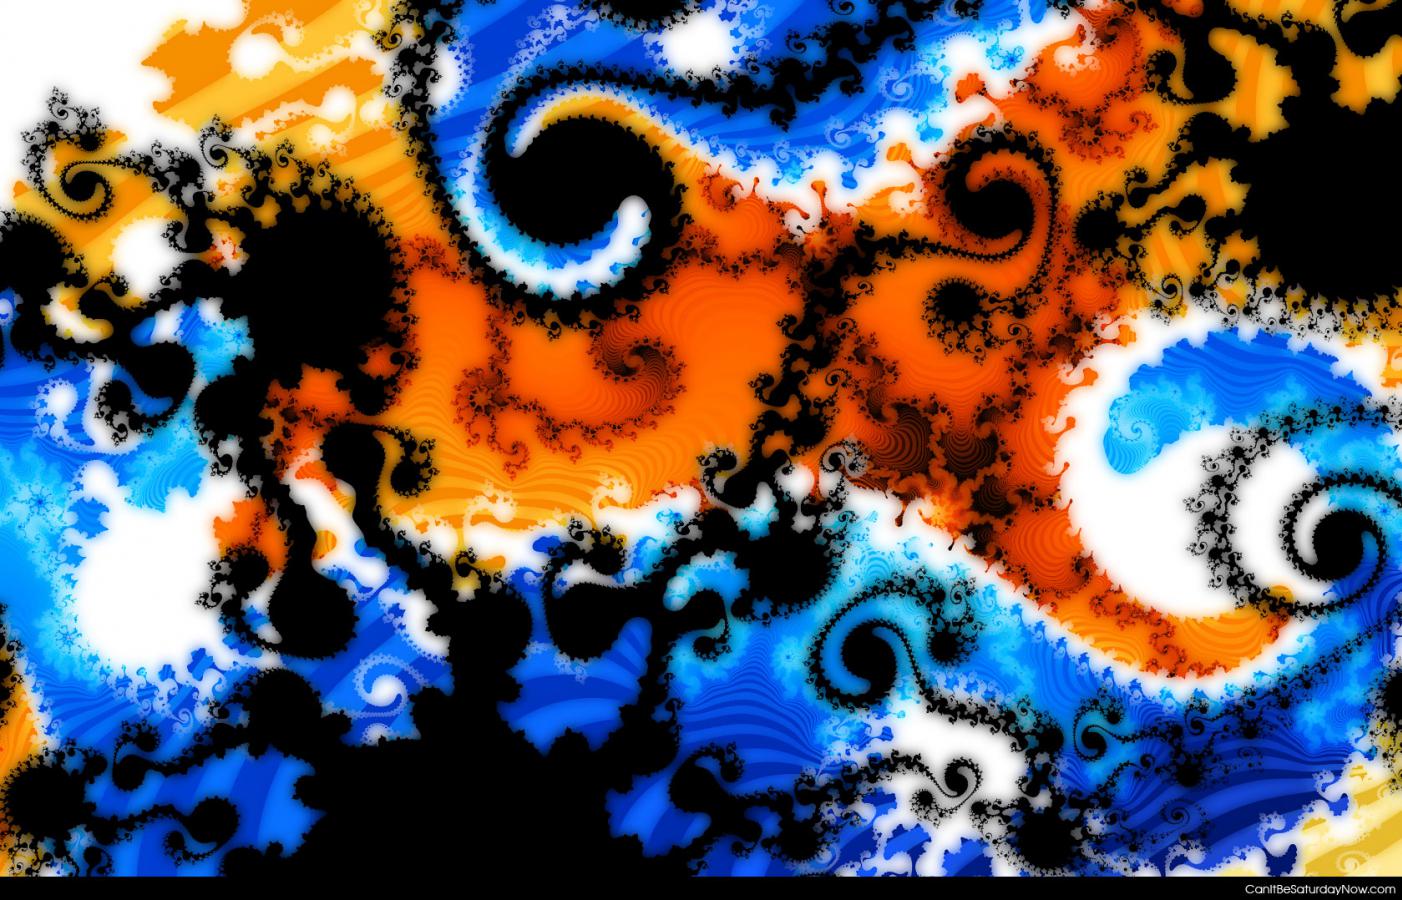 Trippy swirl art - flashbacks anyone ?